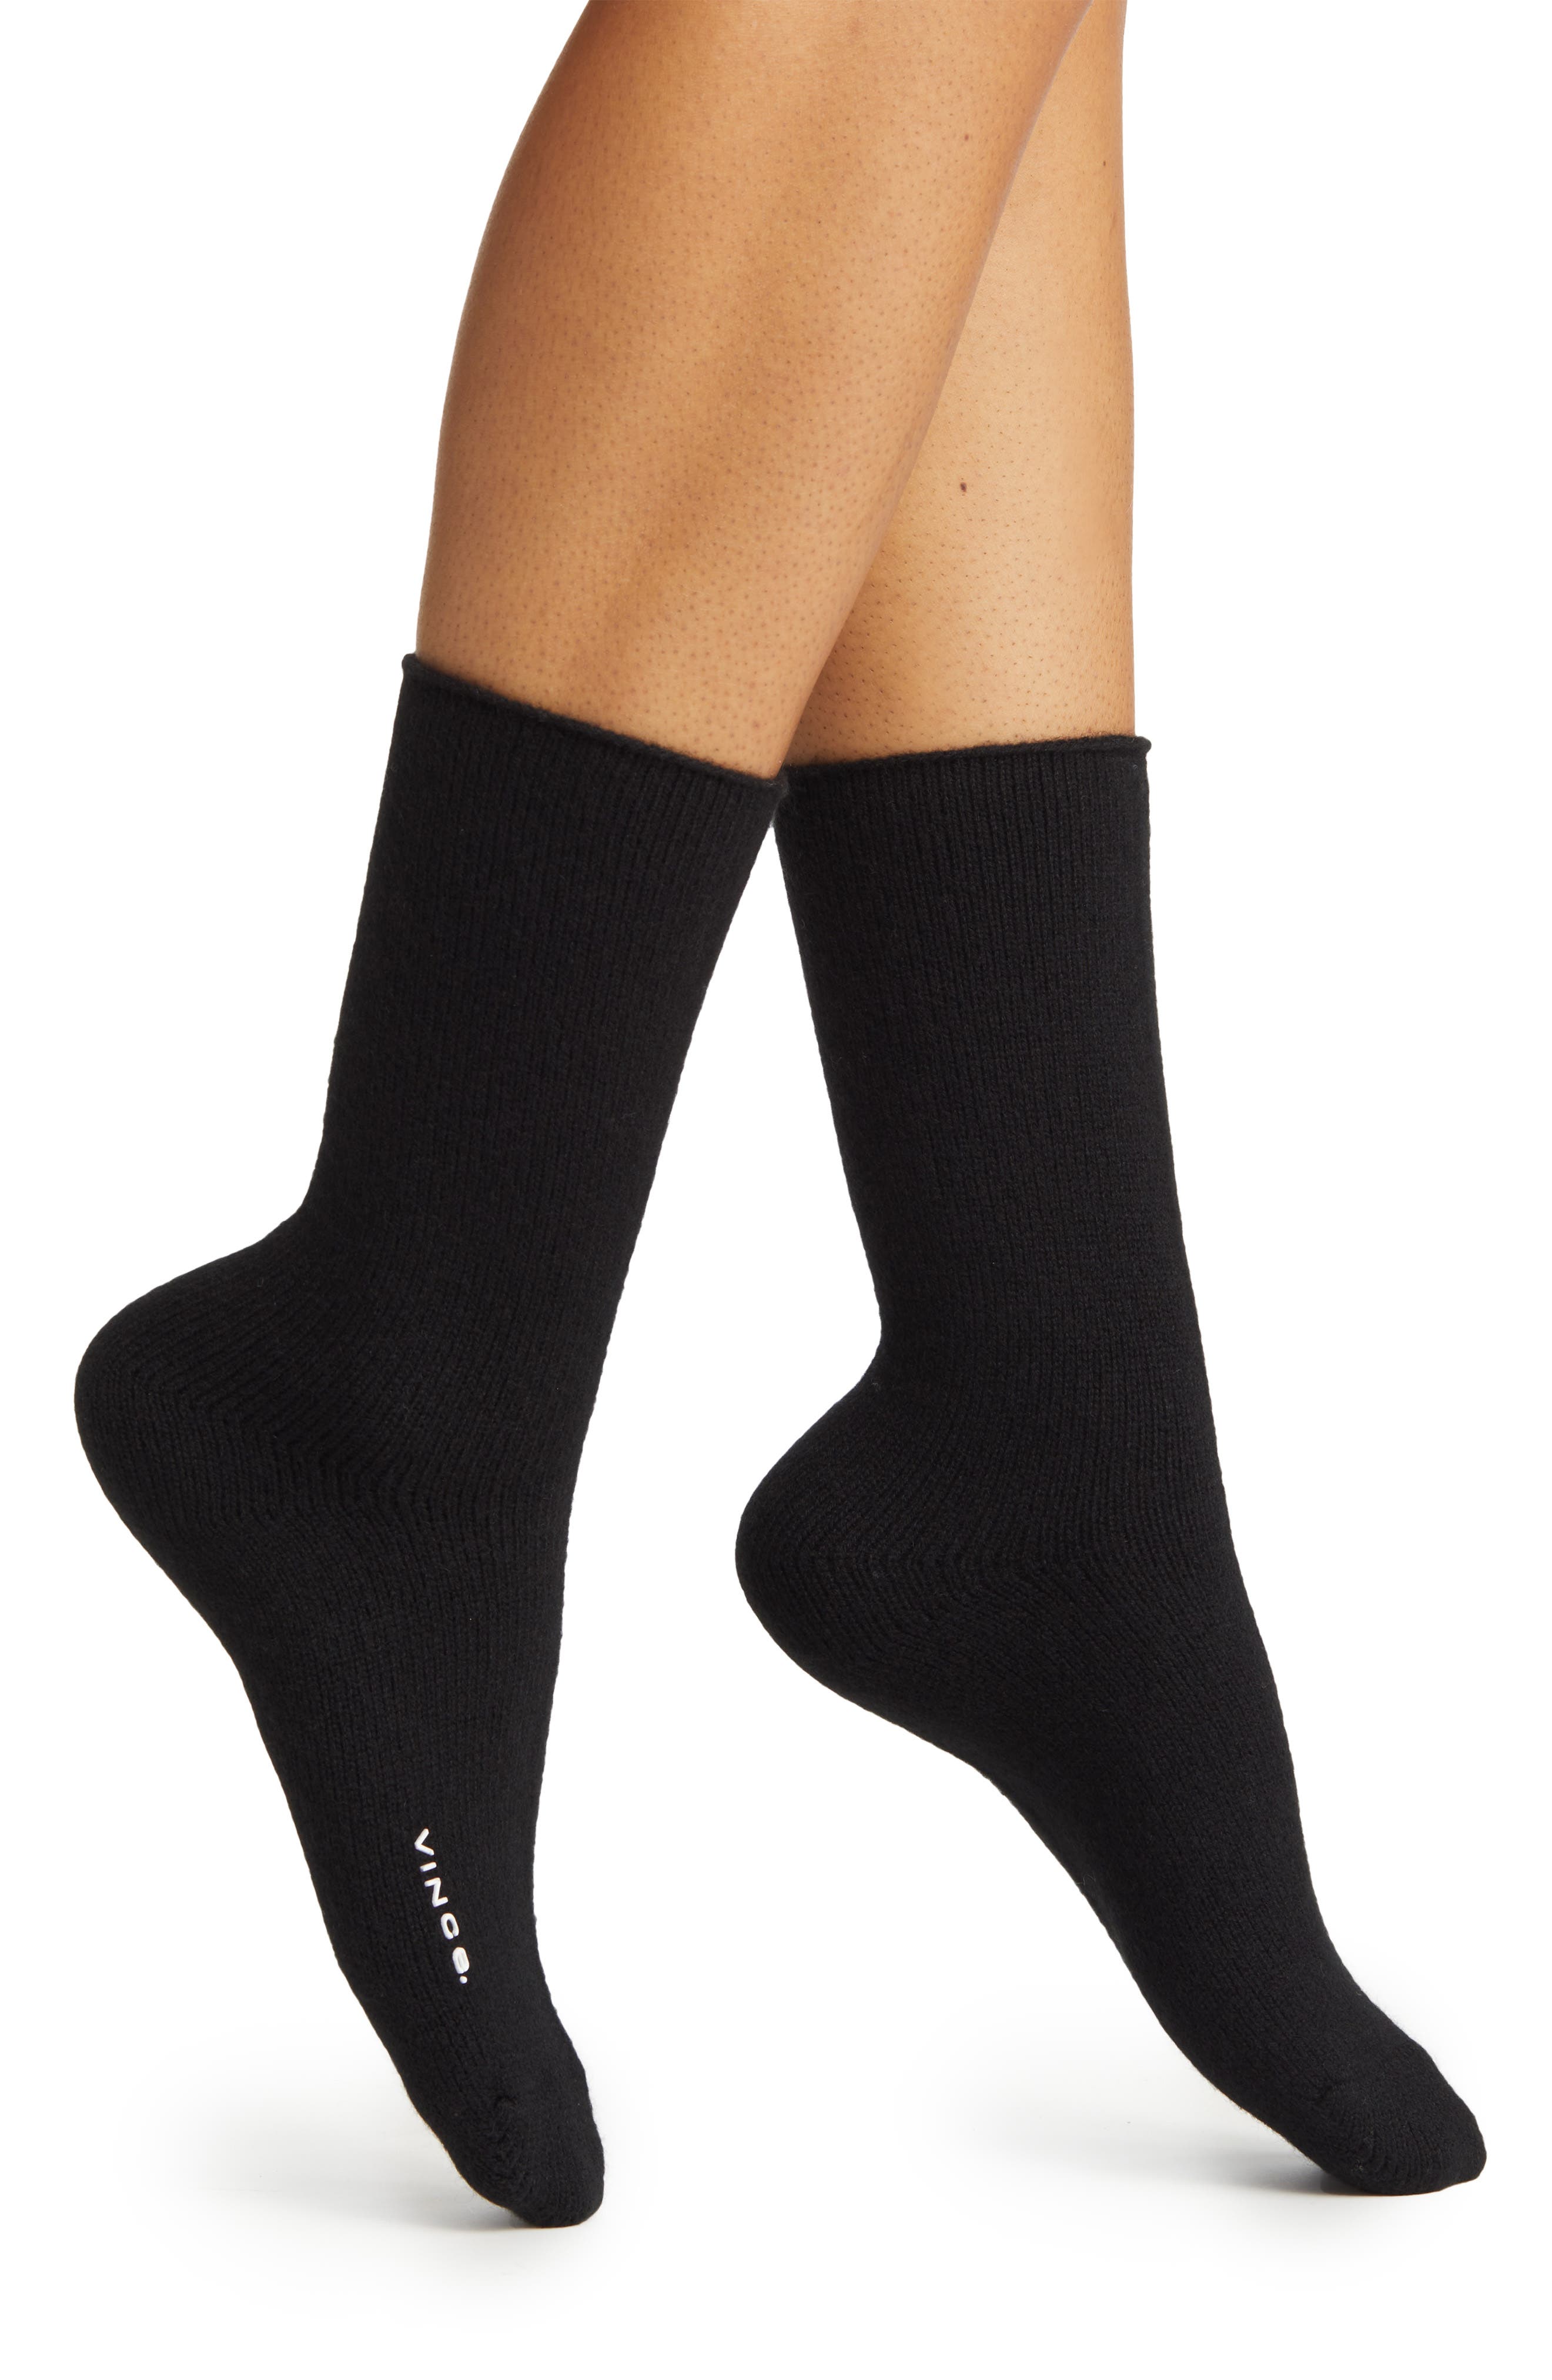 Calzedonia Cashmere Sport Short Socks in White Womens Clothing Hosiery 